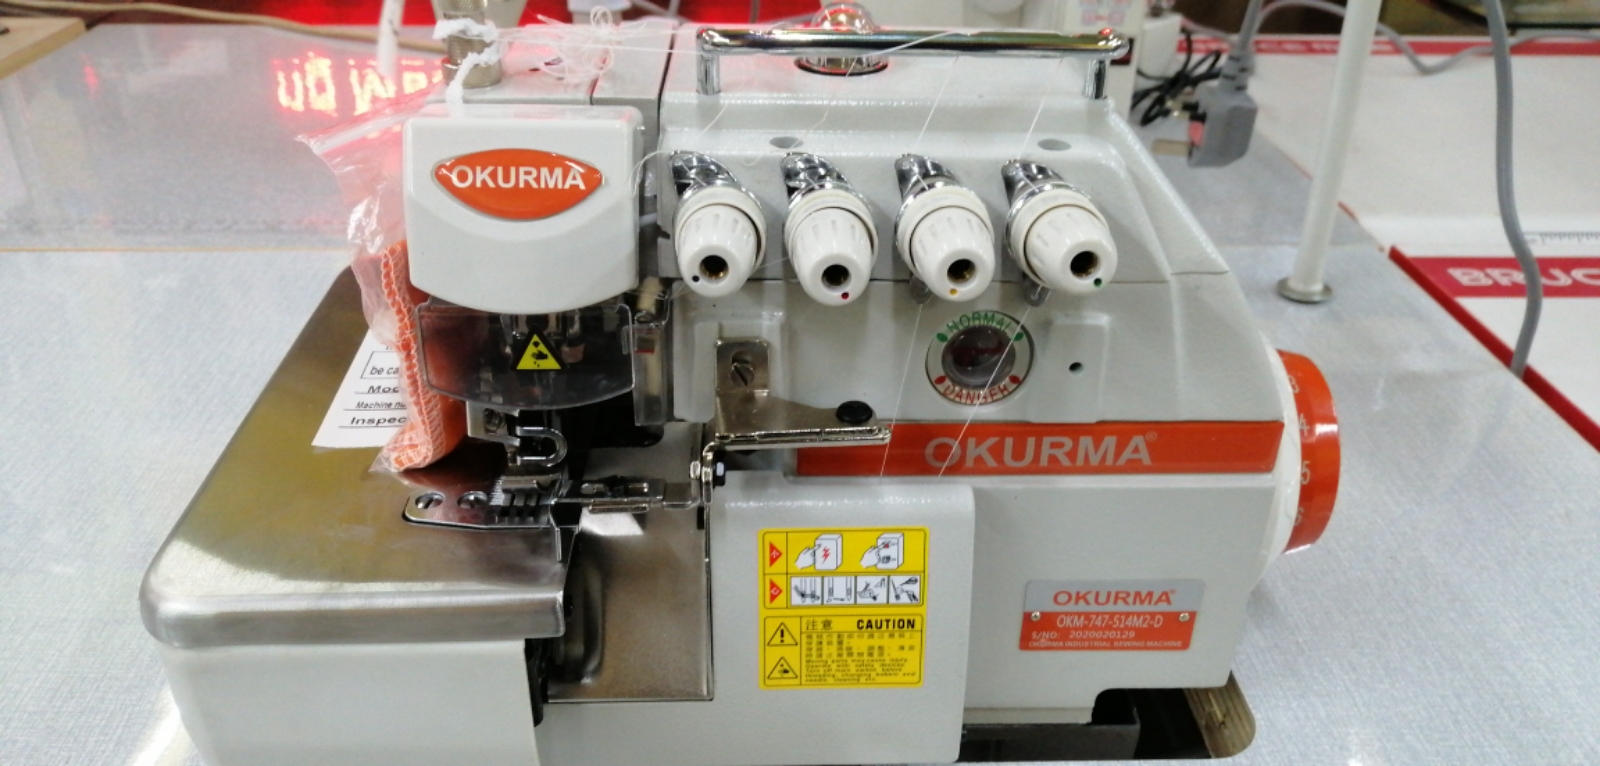 Okurma Industrial Overlock Sewing Machine 